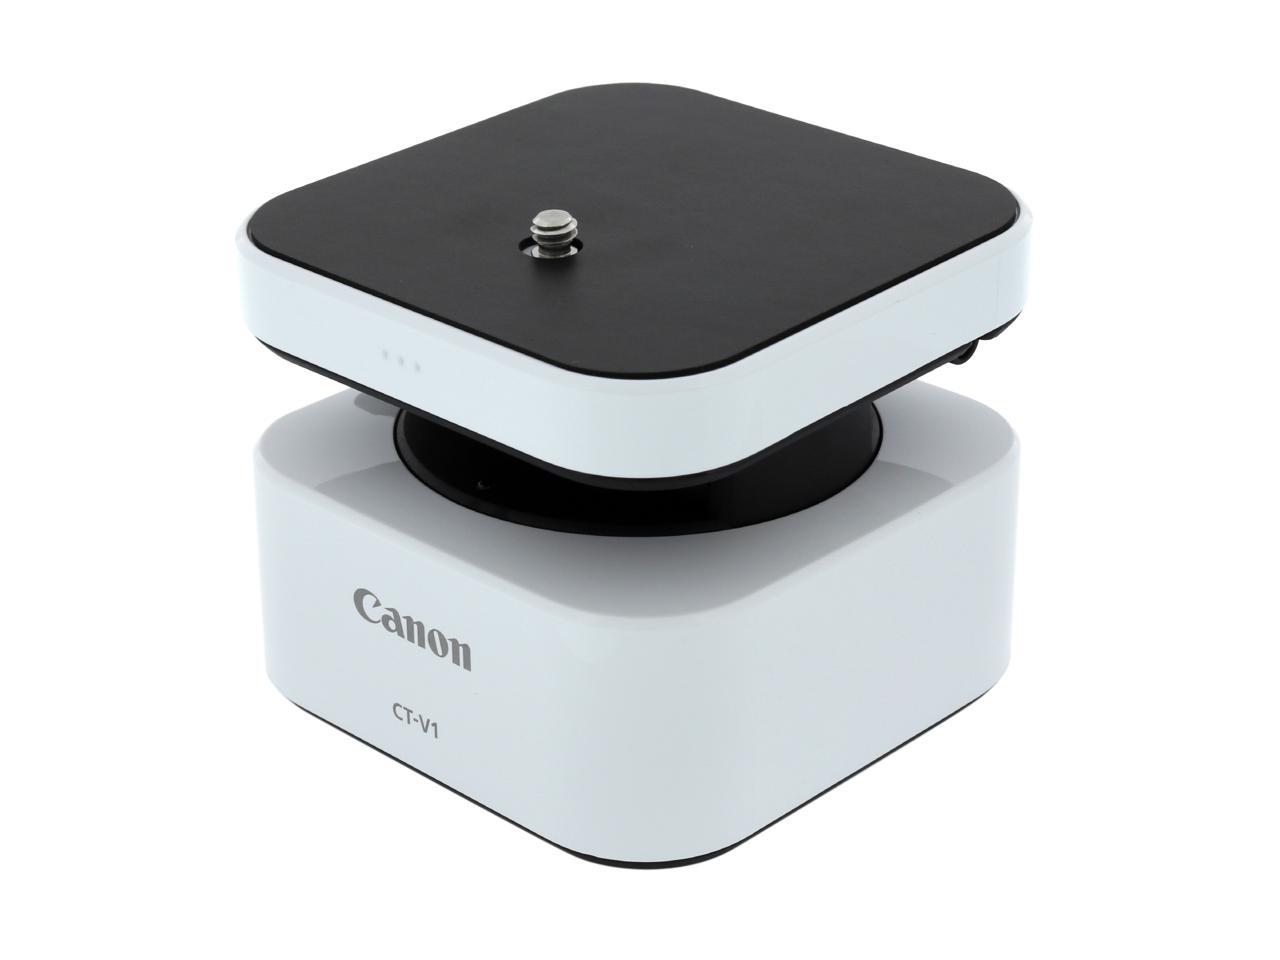 Canon CT-V1 9626B002 Camera Pan Table - Newegg.com